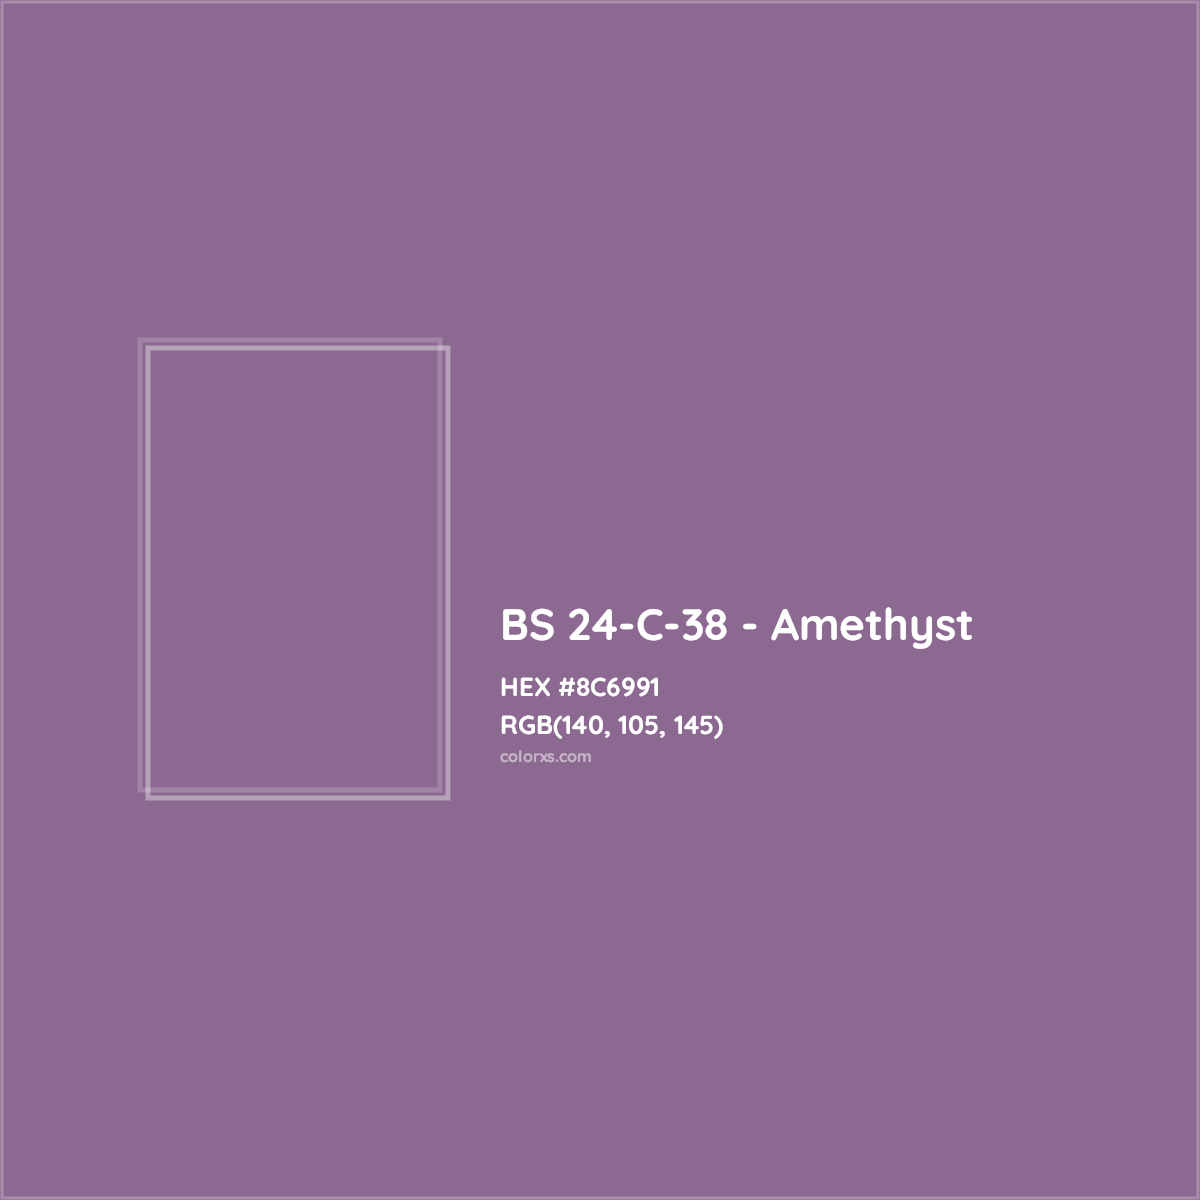 HEX #8C6991 BS 24-C-38 - Amethyst CMS British Standard 4800 - Color Code